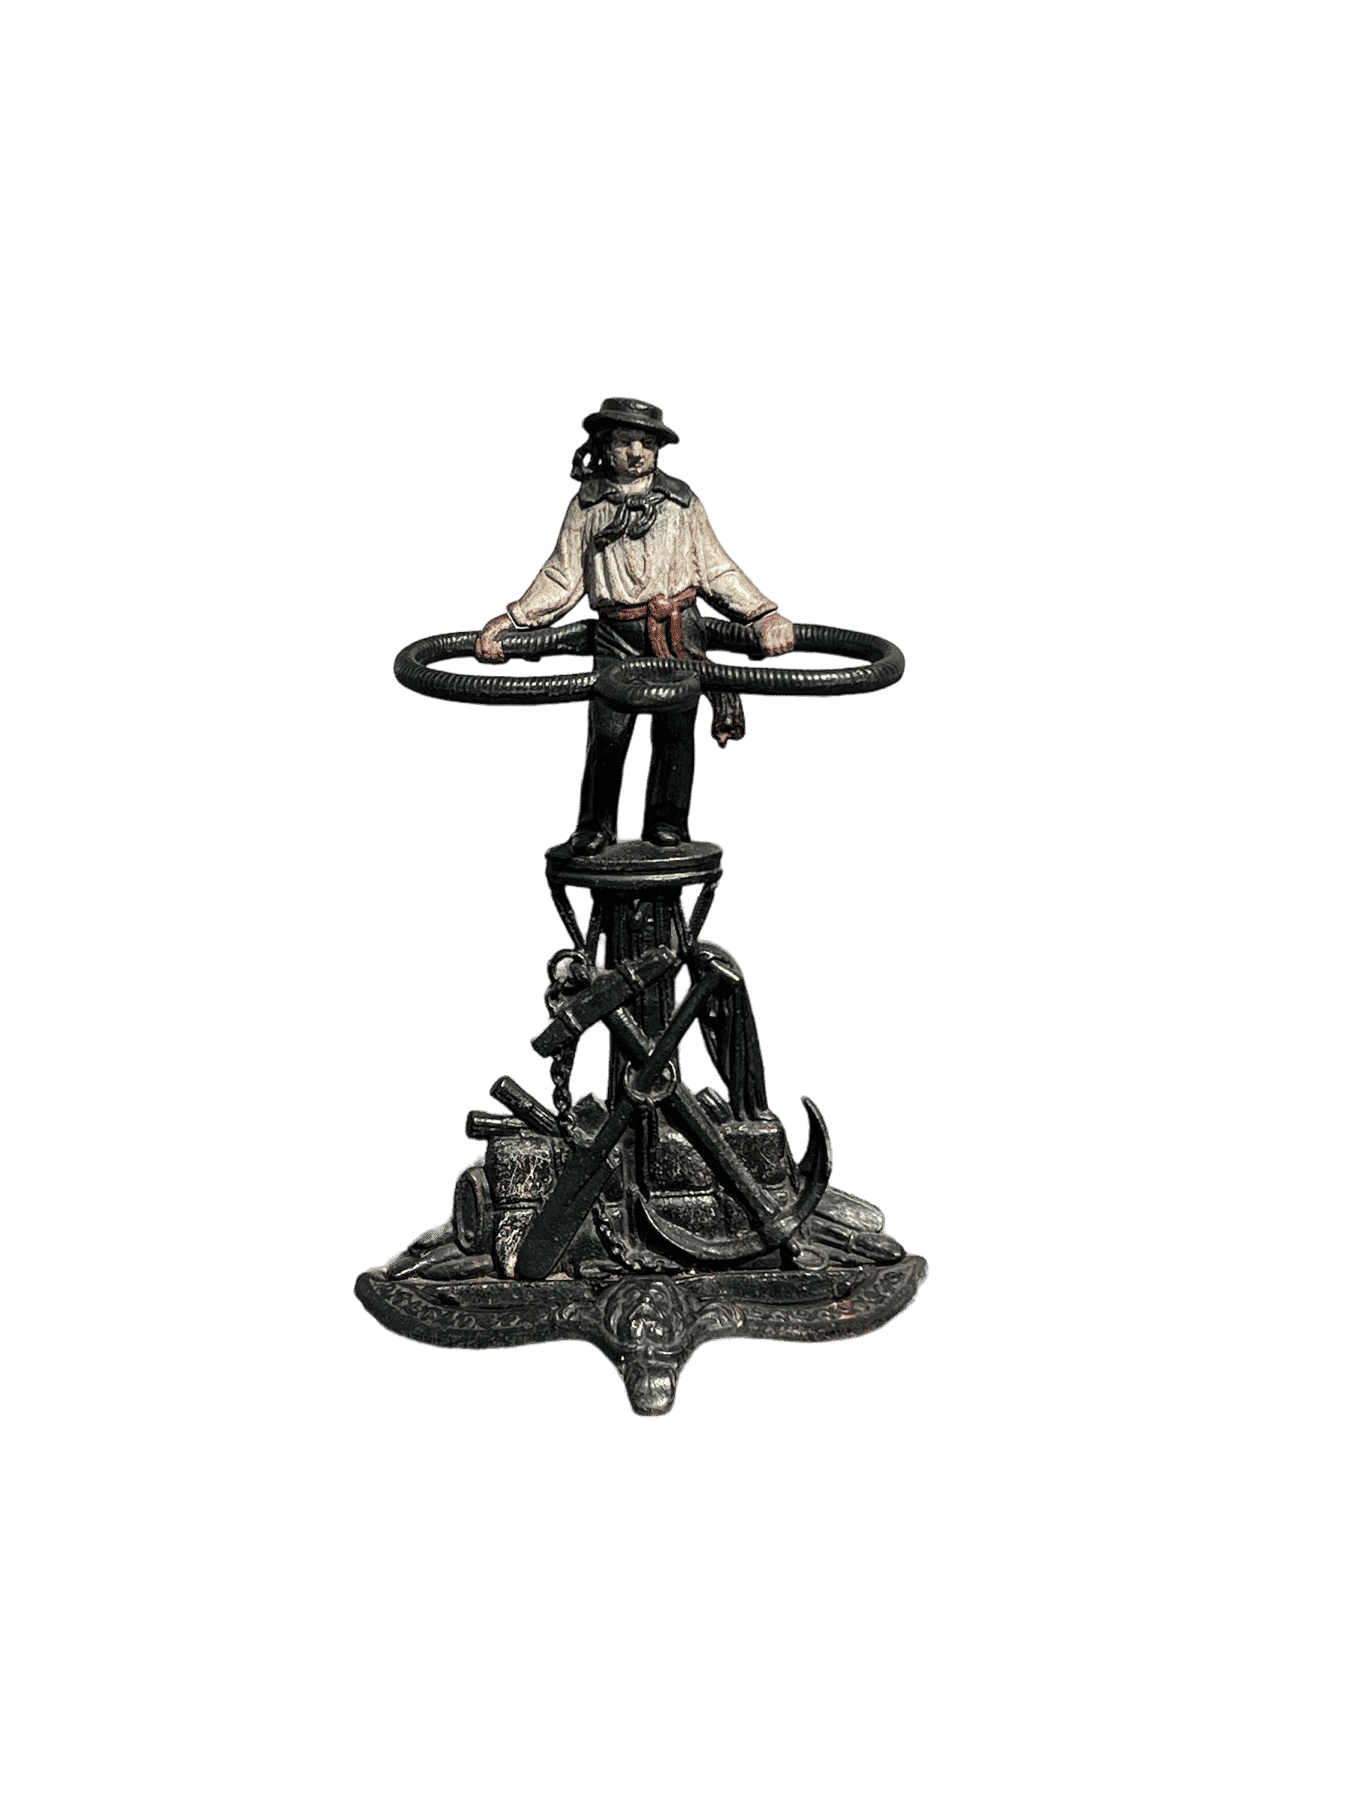 Jack Tar cast iron umbrella stand, c. 1860